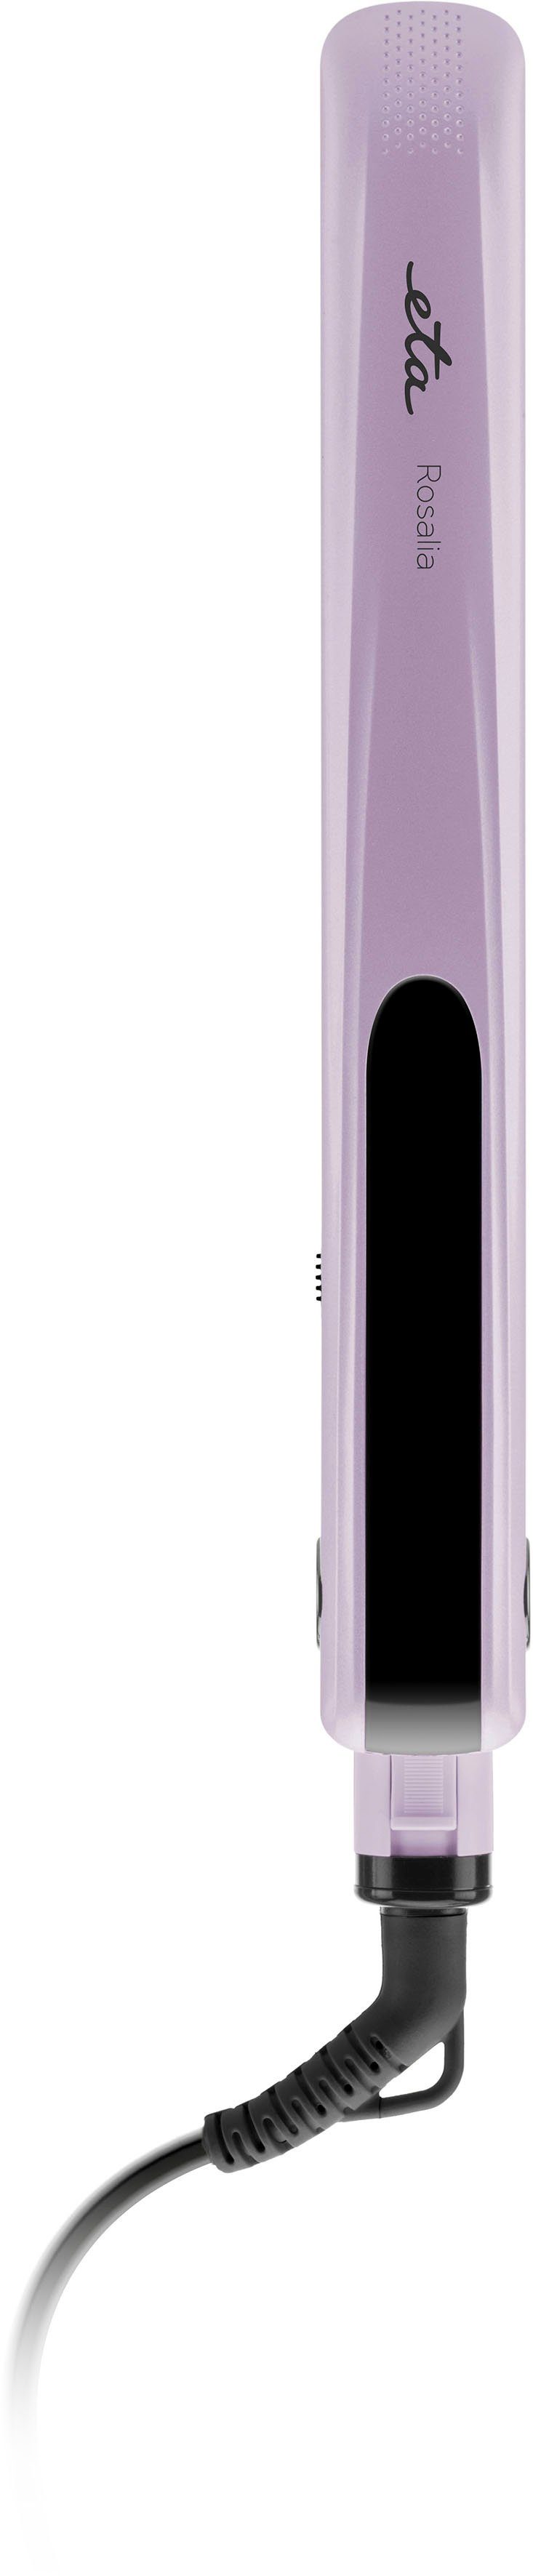 Glätteisen ETA433790000 W & ROSALIA Glätteisen Reisehaartrockner 1200 aus 220°C Keramik-Turmalin-Beschichtung, besteht eta Haarset,